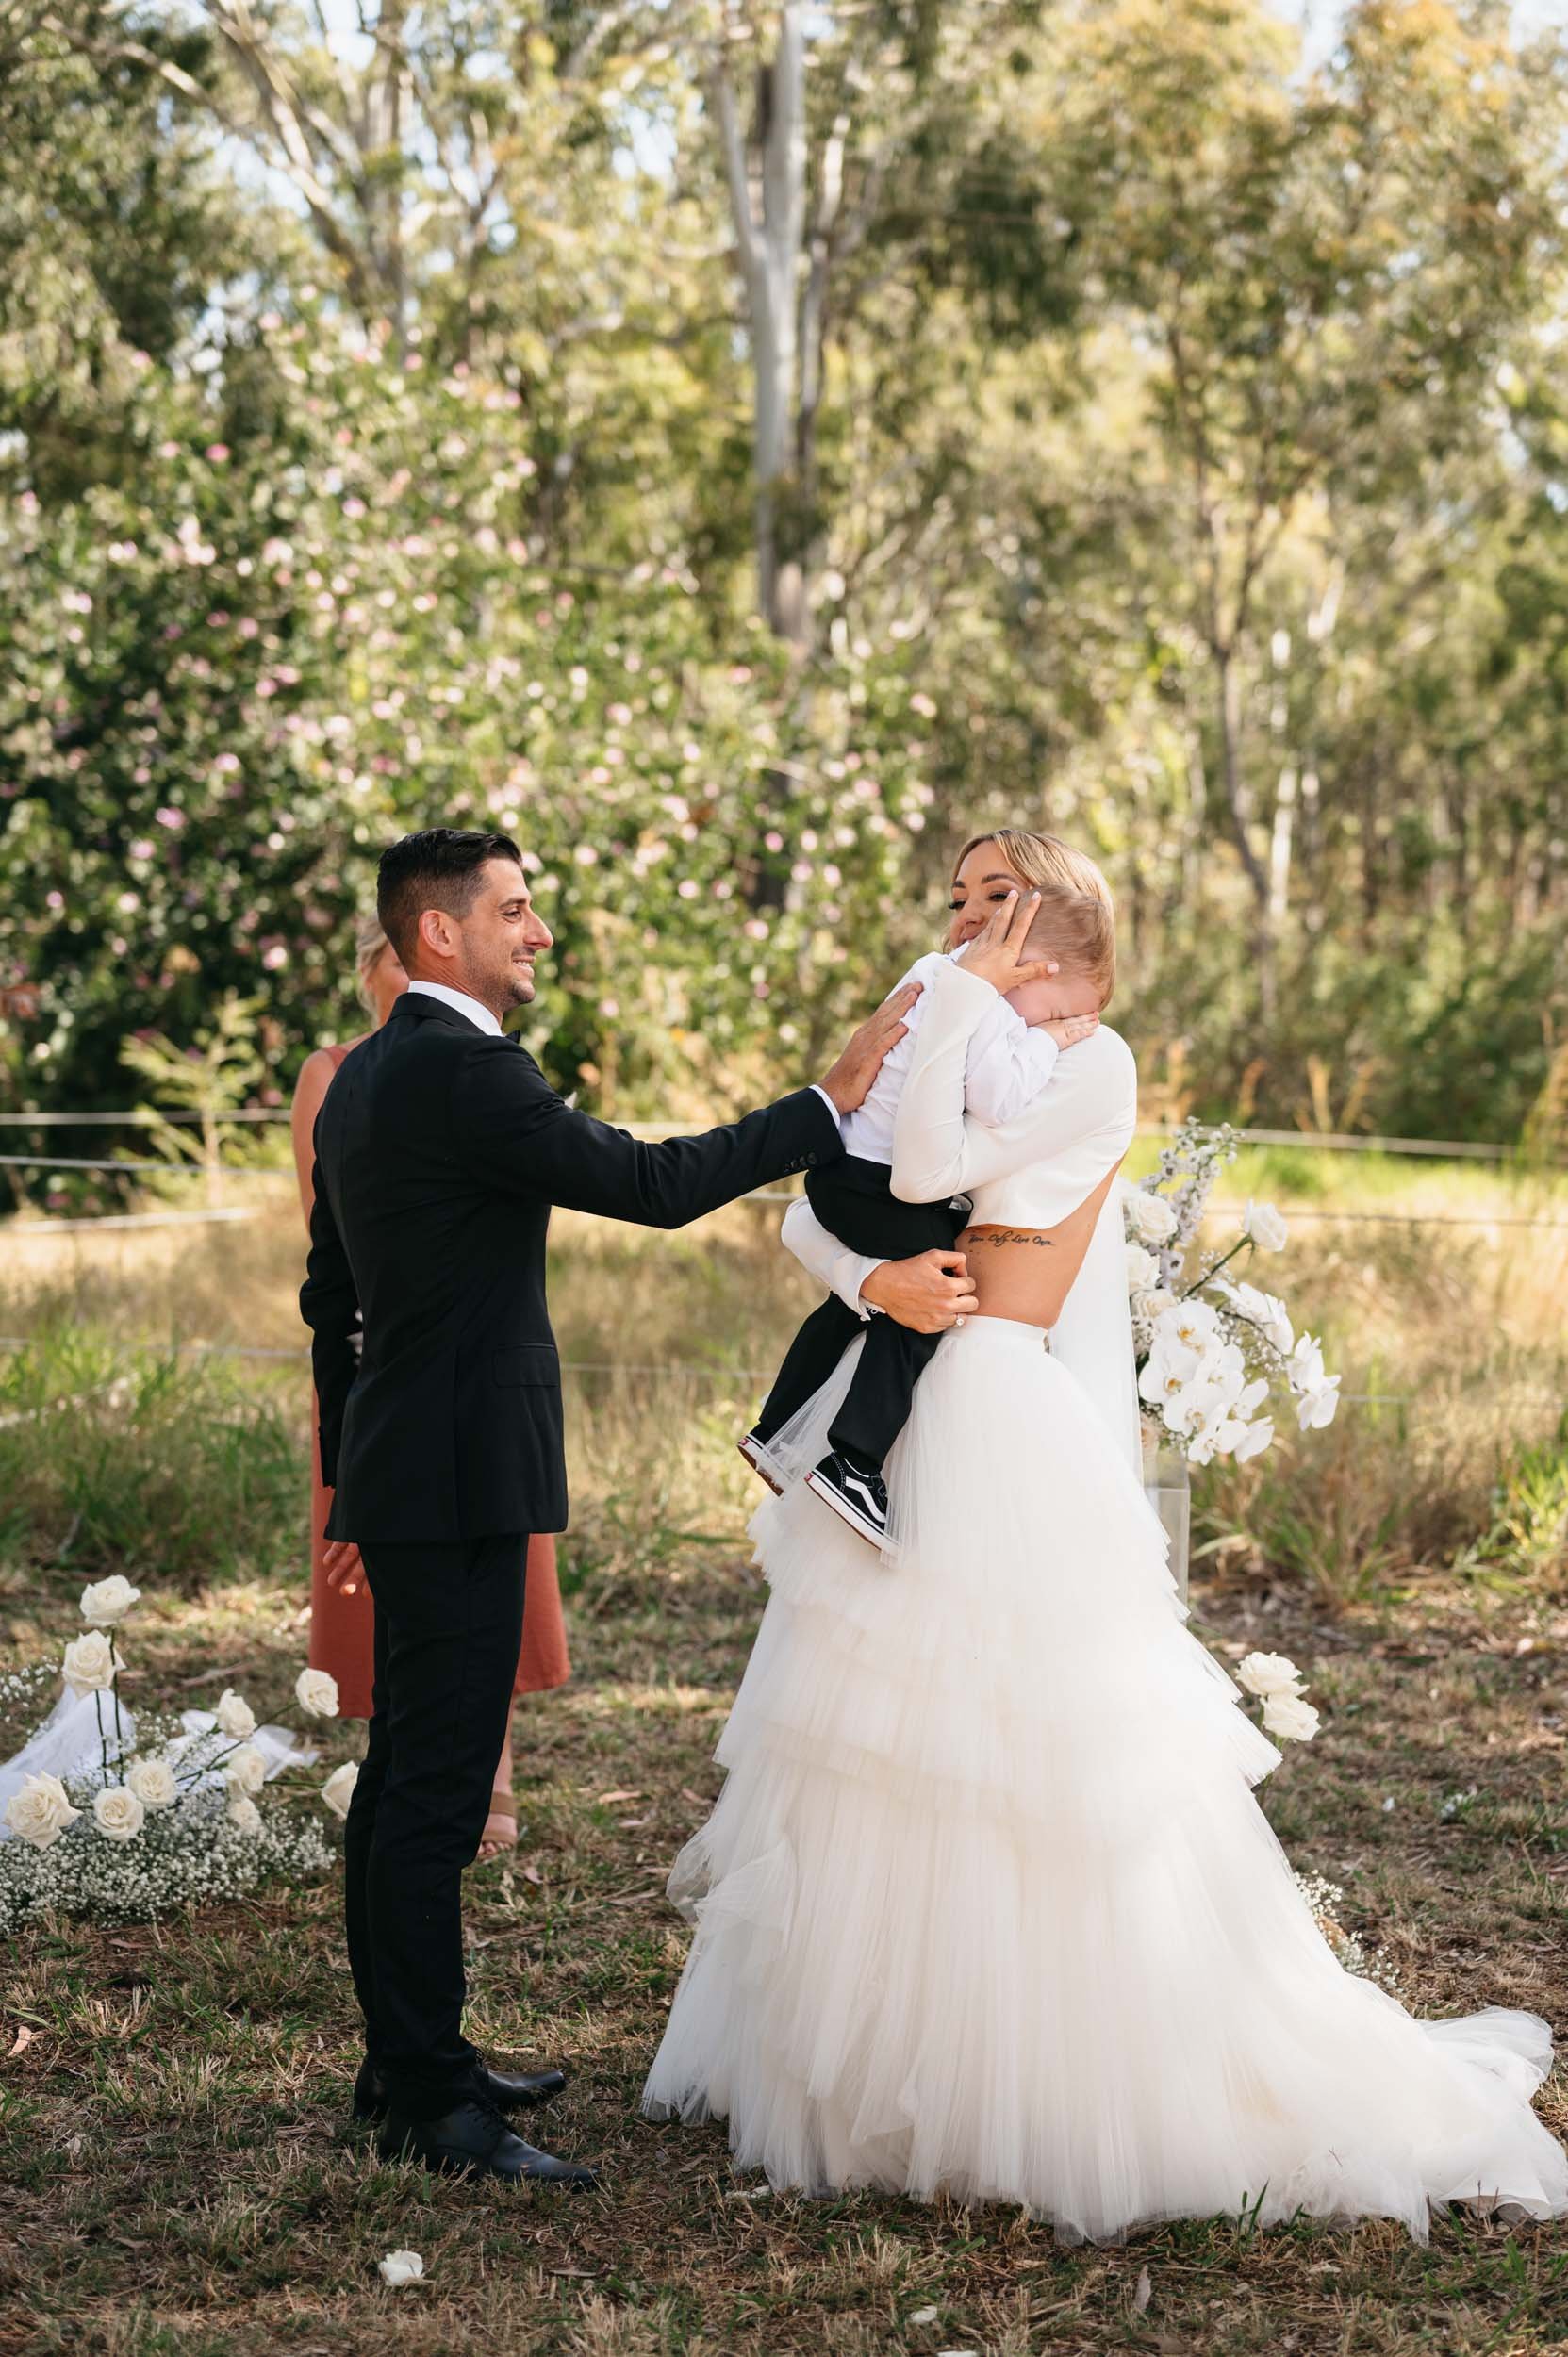 The Raw Photographer - Cairns Wedding Photographer - Mareeba Tablelands - Queensland photography - Kyha dress - luxury-26.jpg